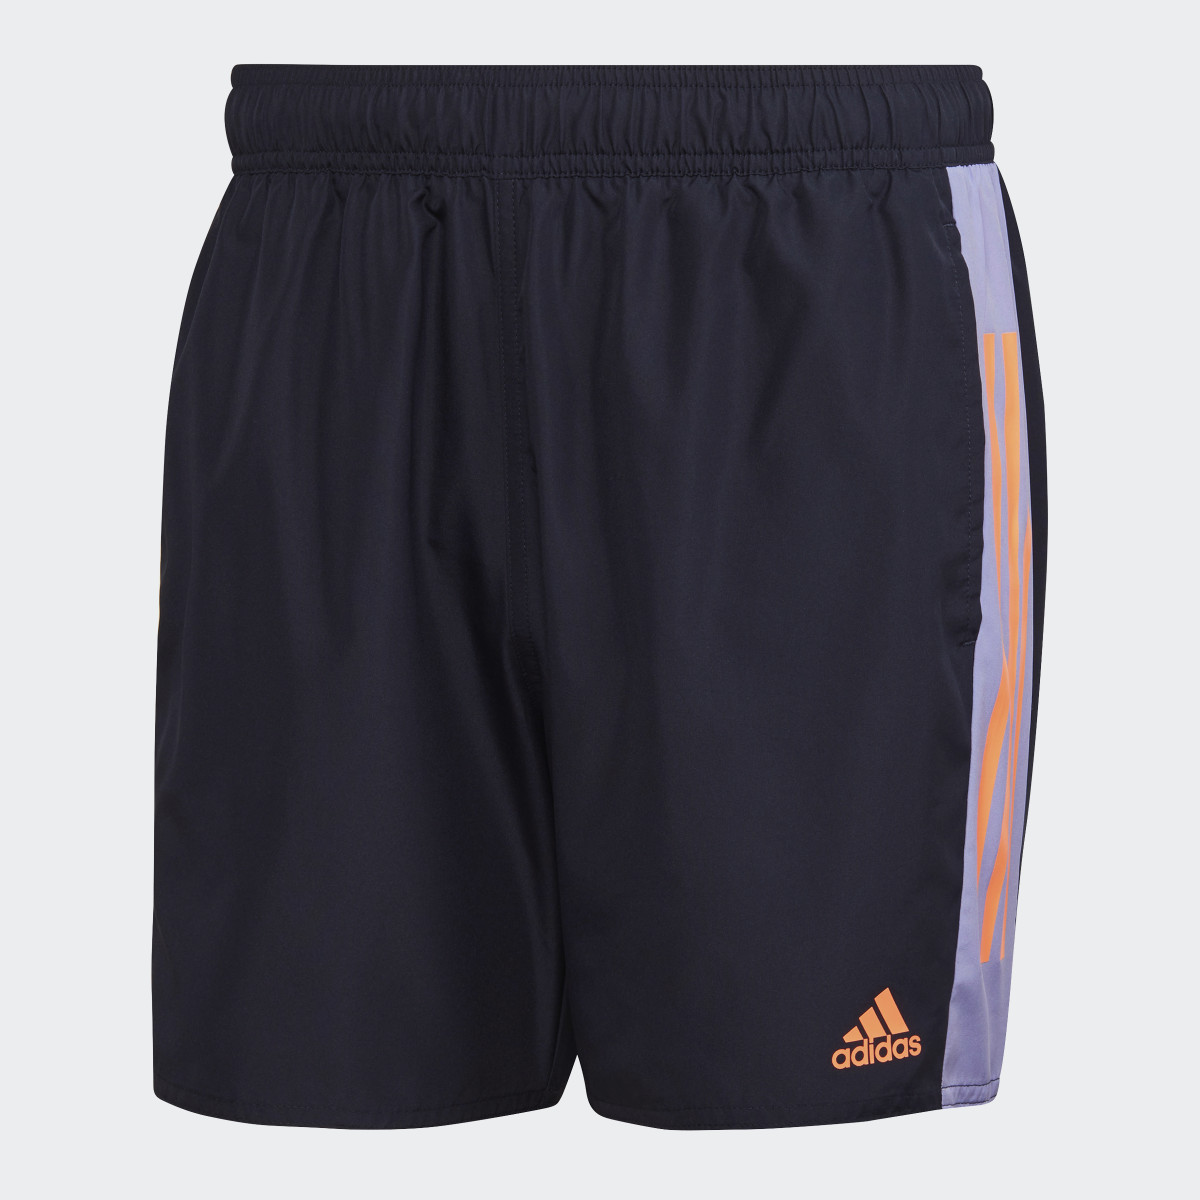 Adidas Short Length Colorblock 3-Stripes Swim Shorts. 4